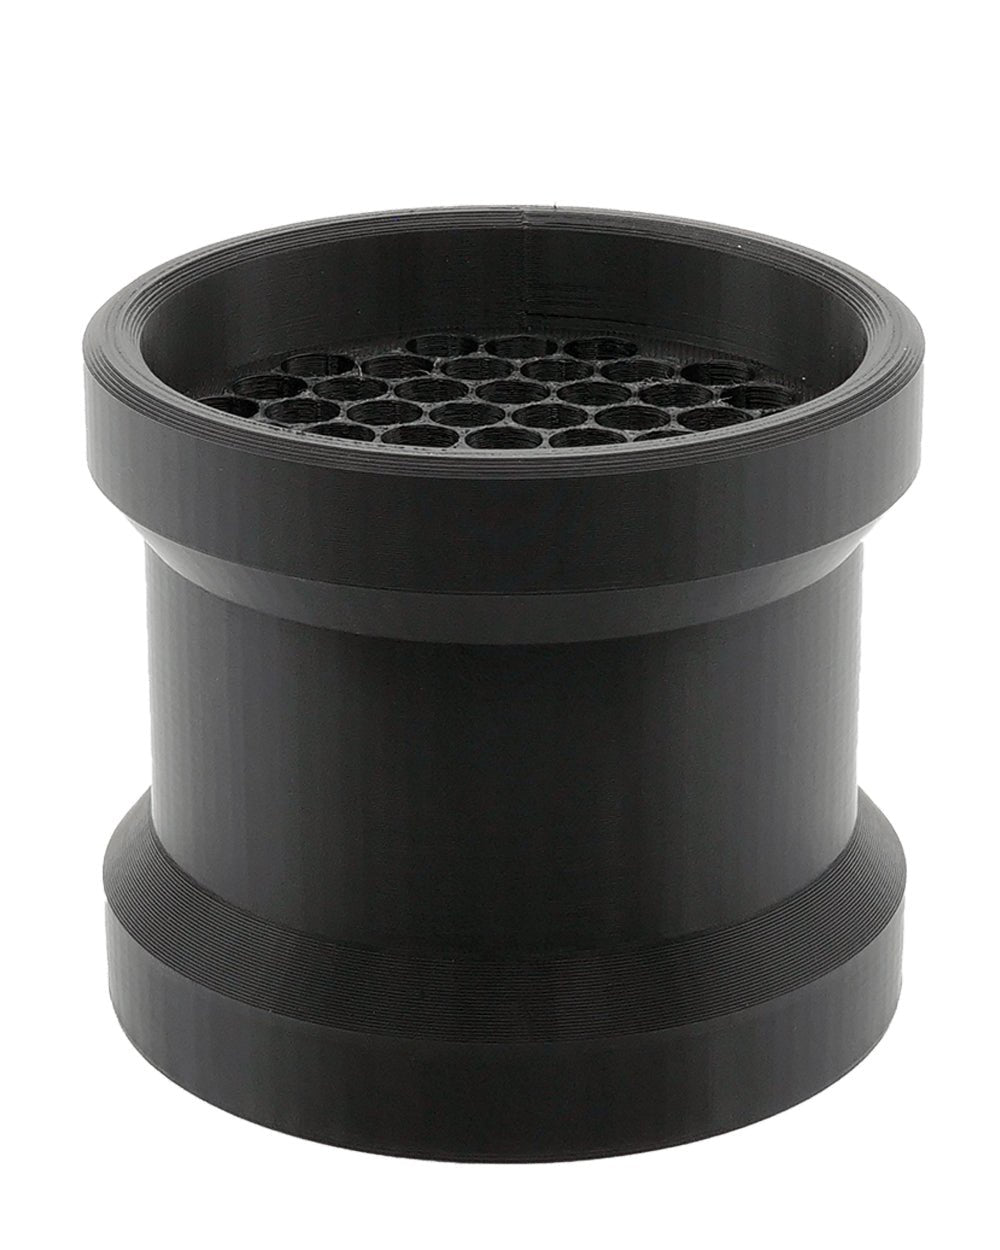 HUMBOLDT | Black Pre-Rolled Cones Filling Machine Starter Kit 84mm | Fill 55 Cones Per Run - 3